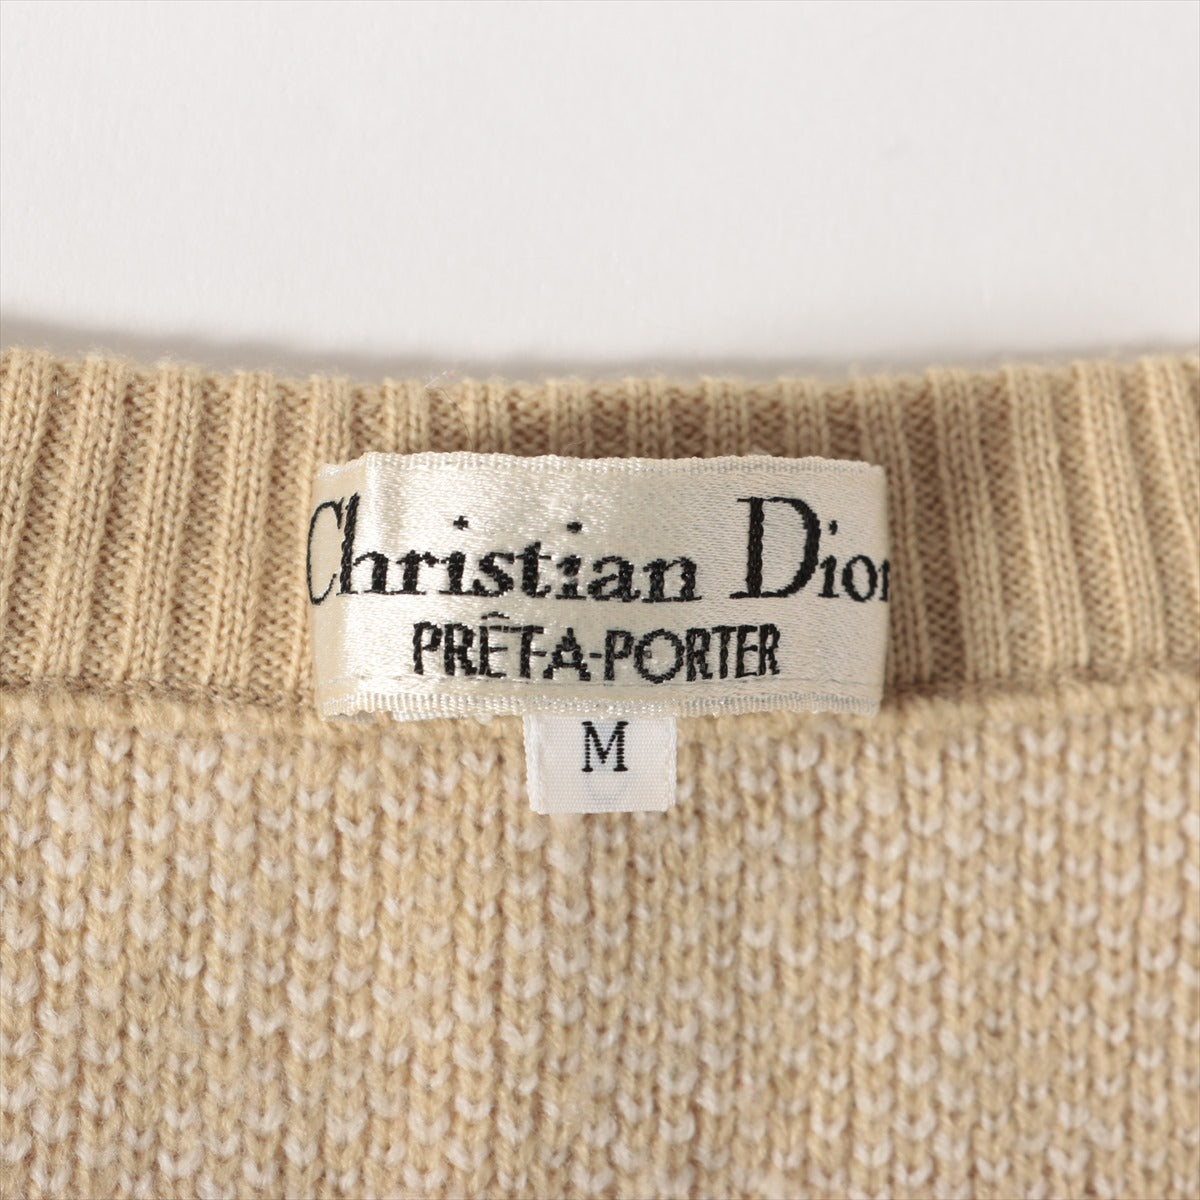 Christian Dior Patta Porte Troter Cotton s Best M  Beige Nuts